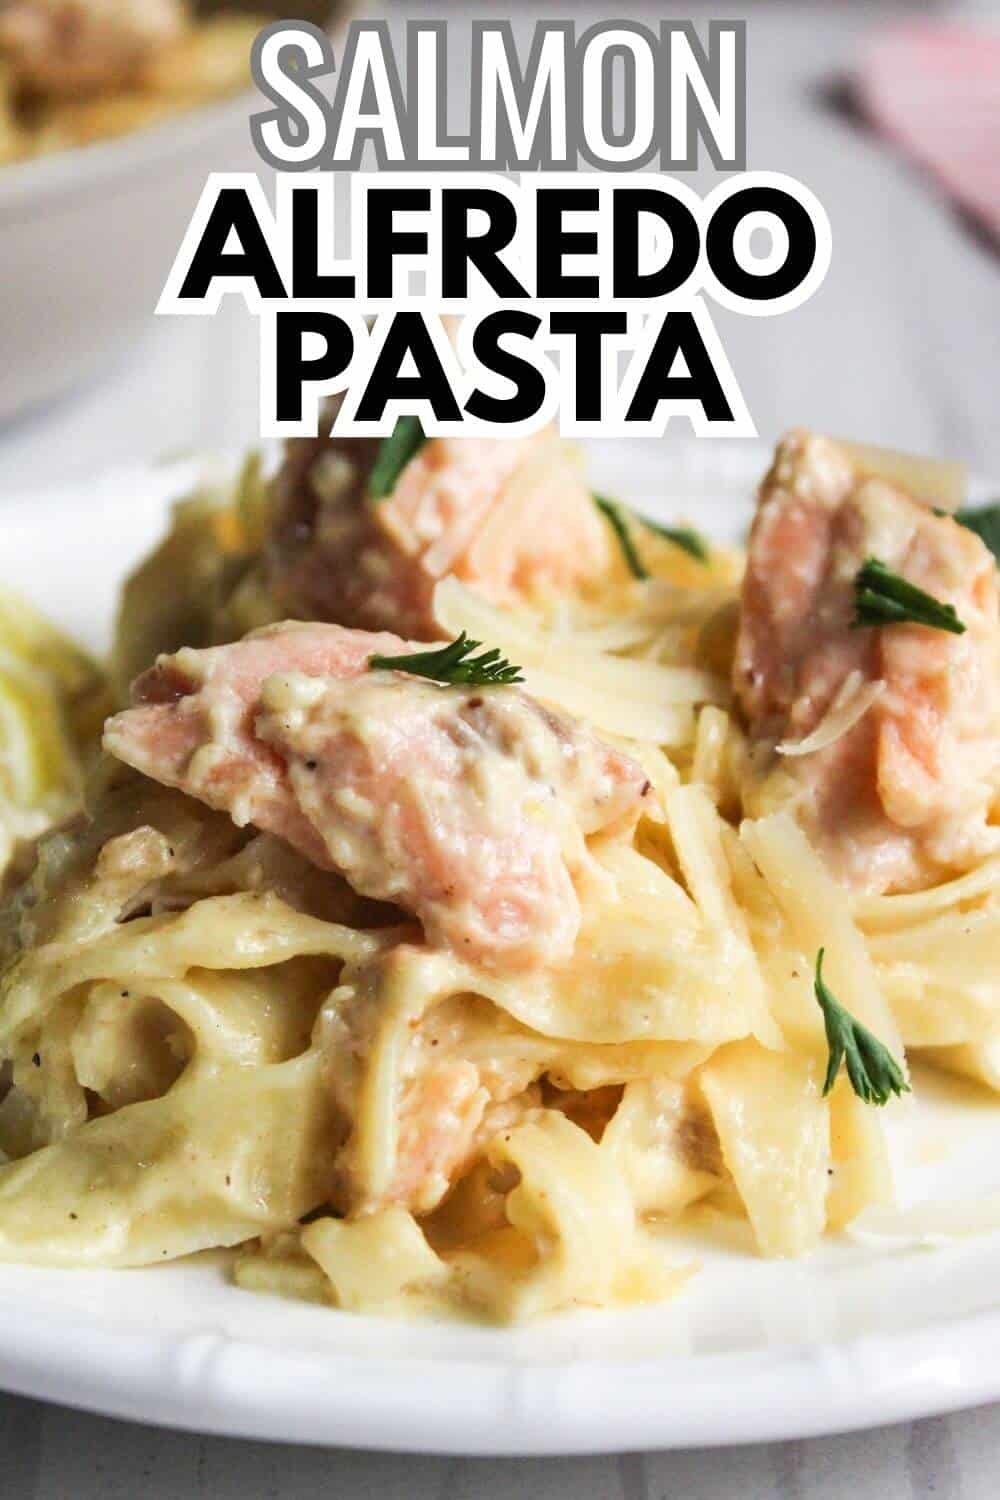 Salmon alfredo pasta with text overlay.